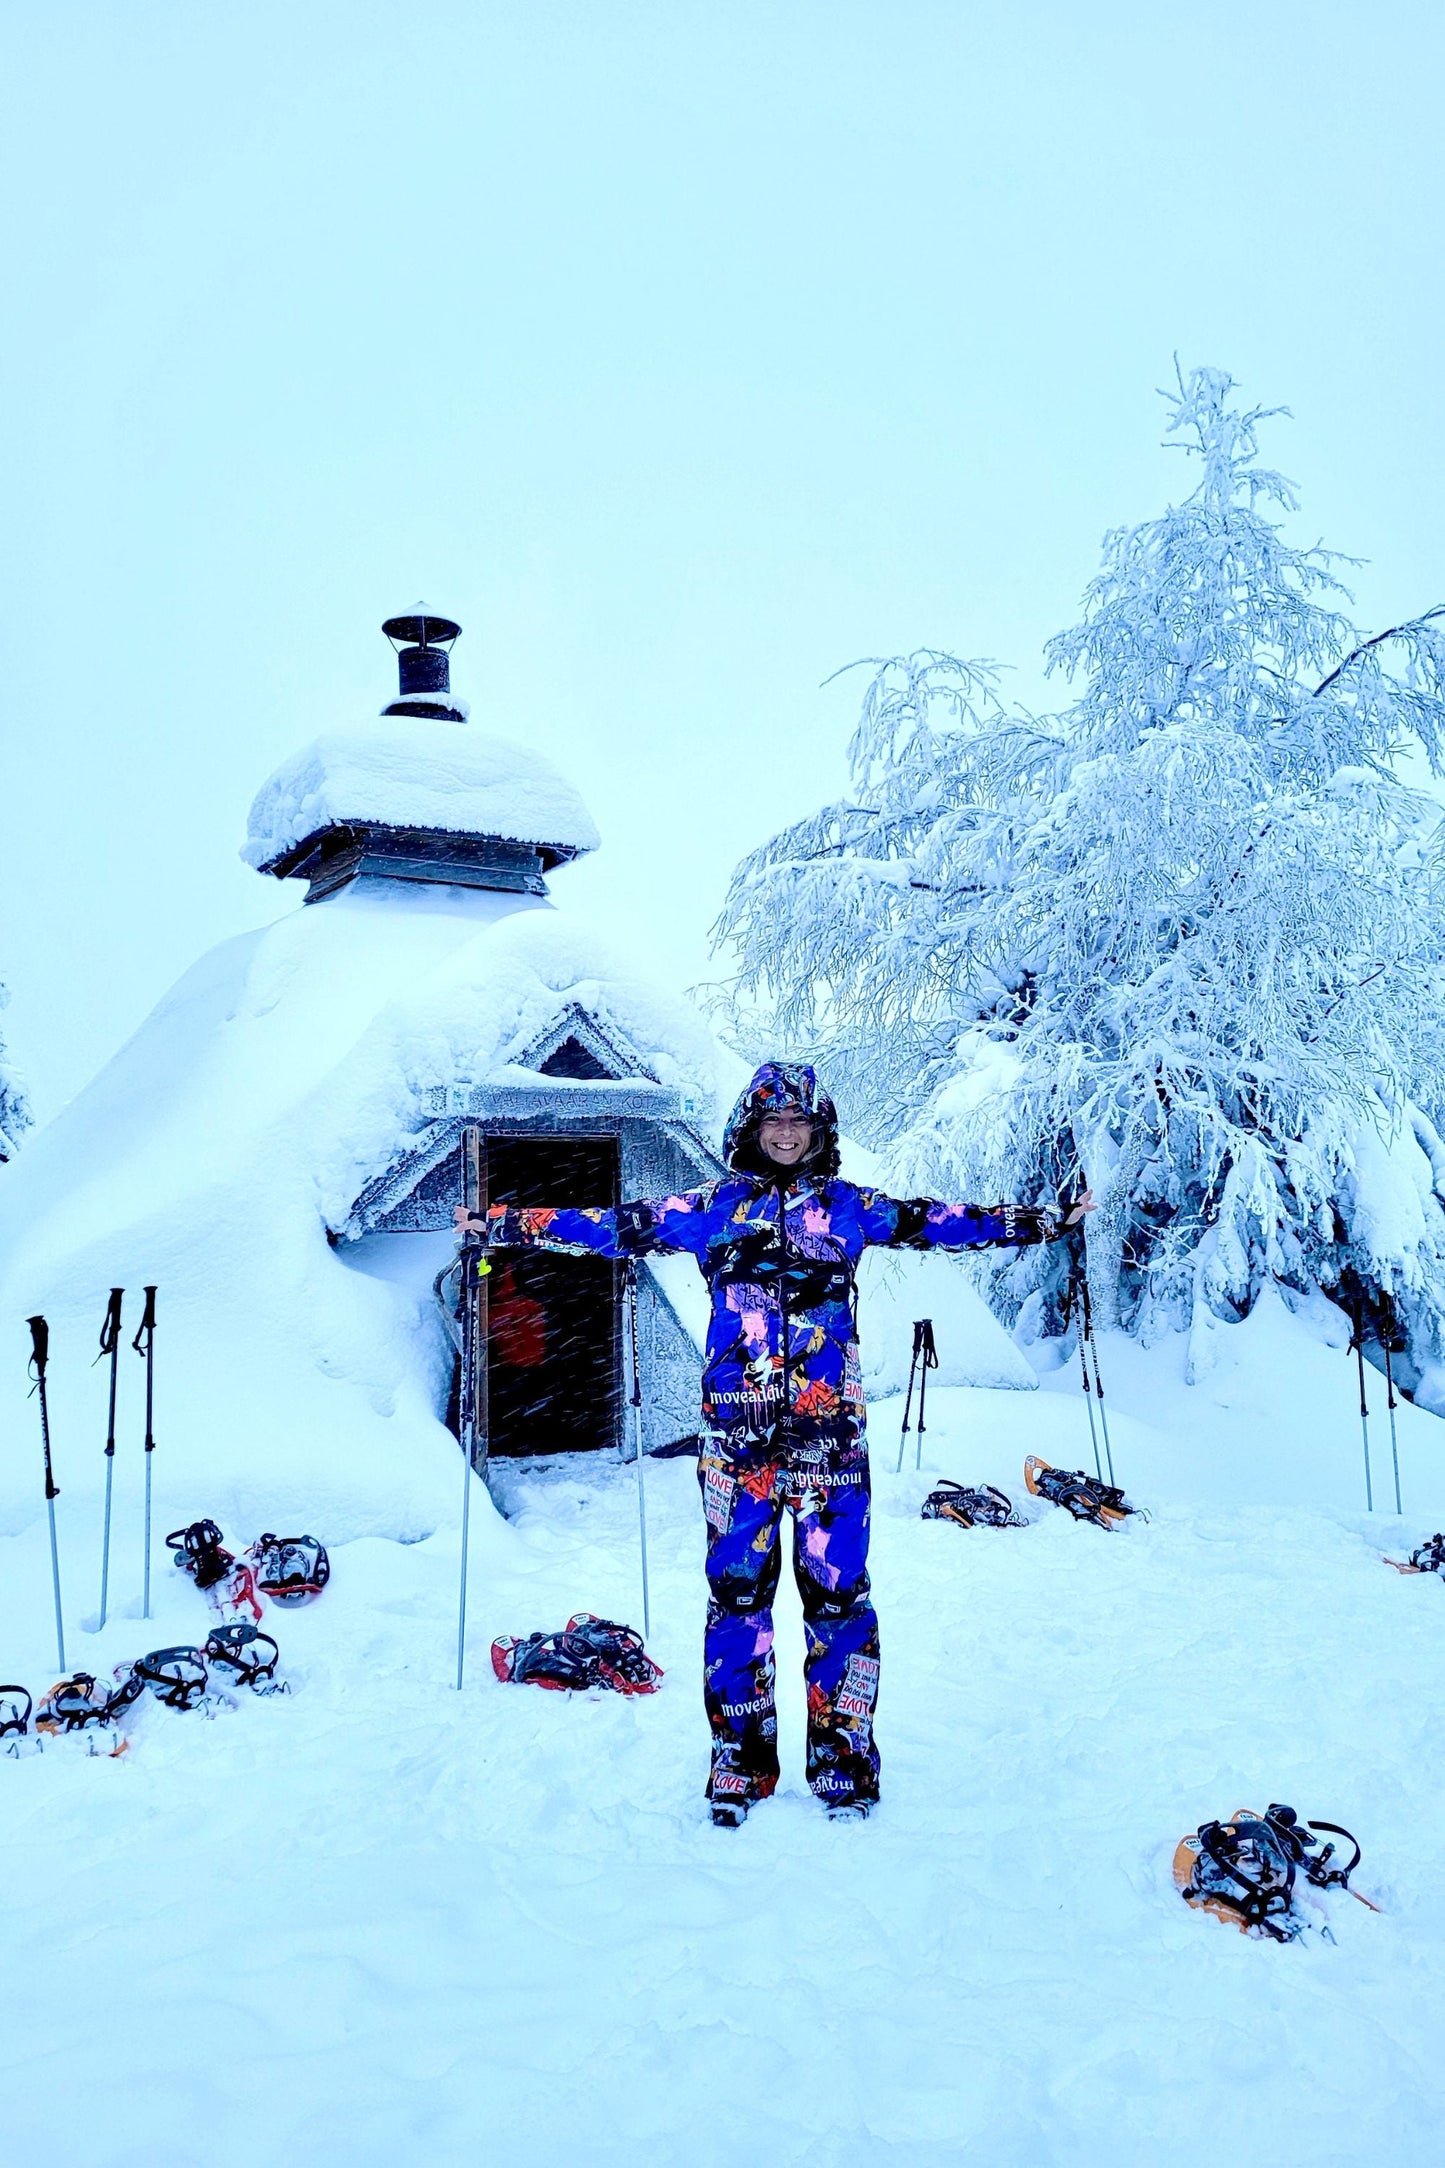 Women`s winter ski / snowboard suit with colorful love & peace print / Snowsuit